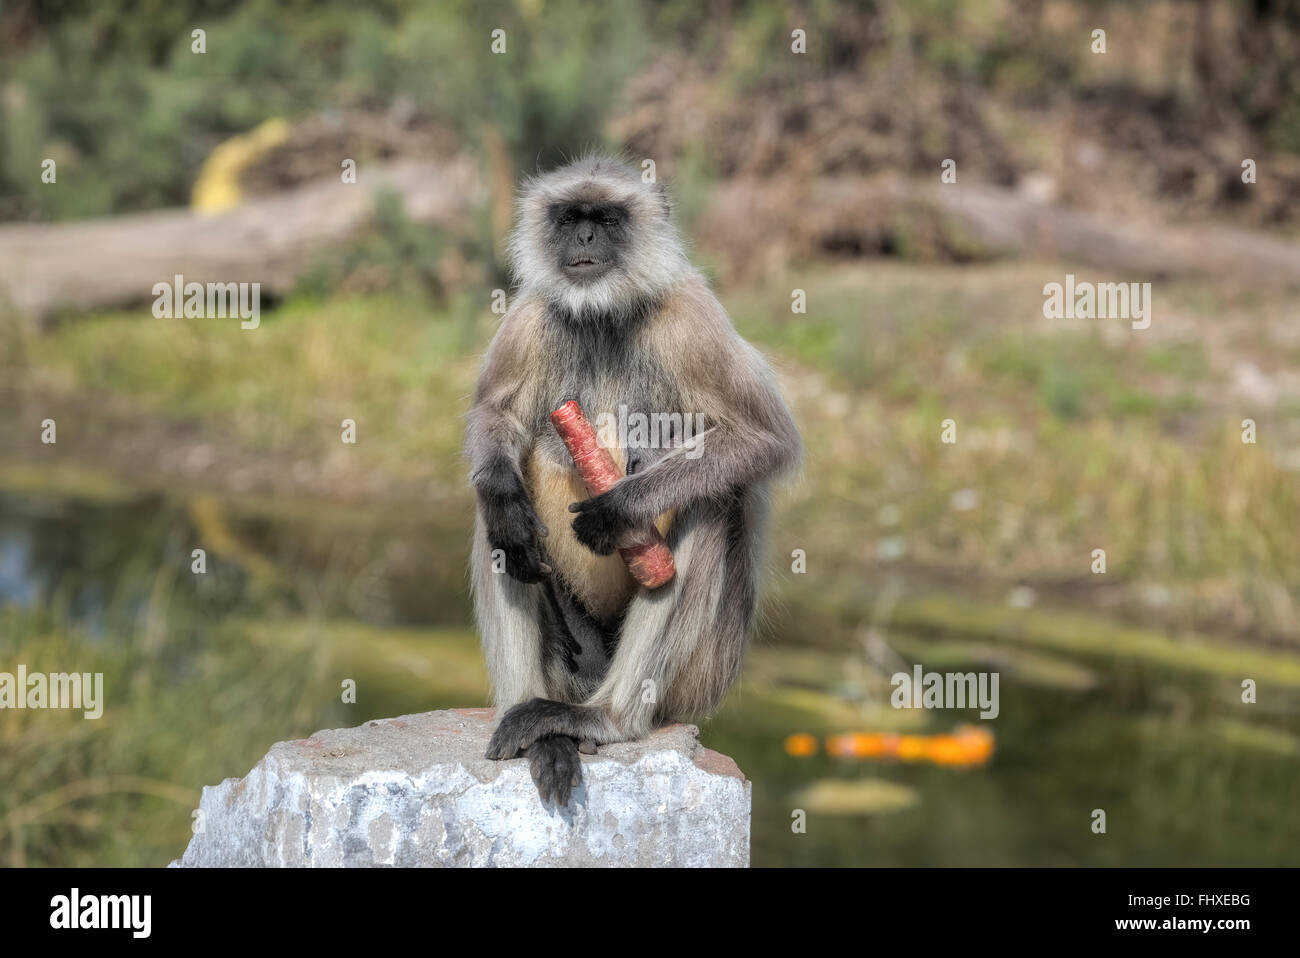 Wild scimmia in Rajasthan, India è mangiare una carota Foto Stock